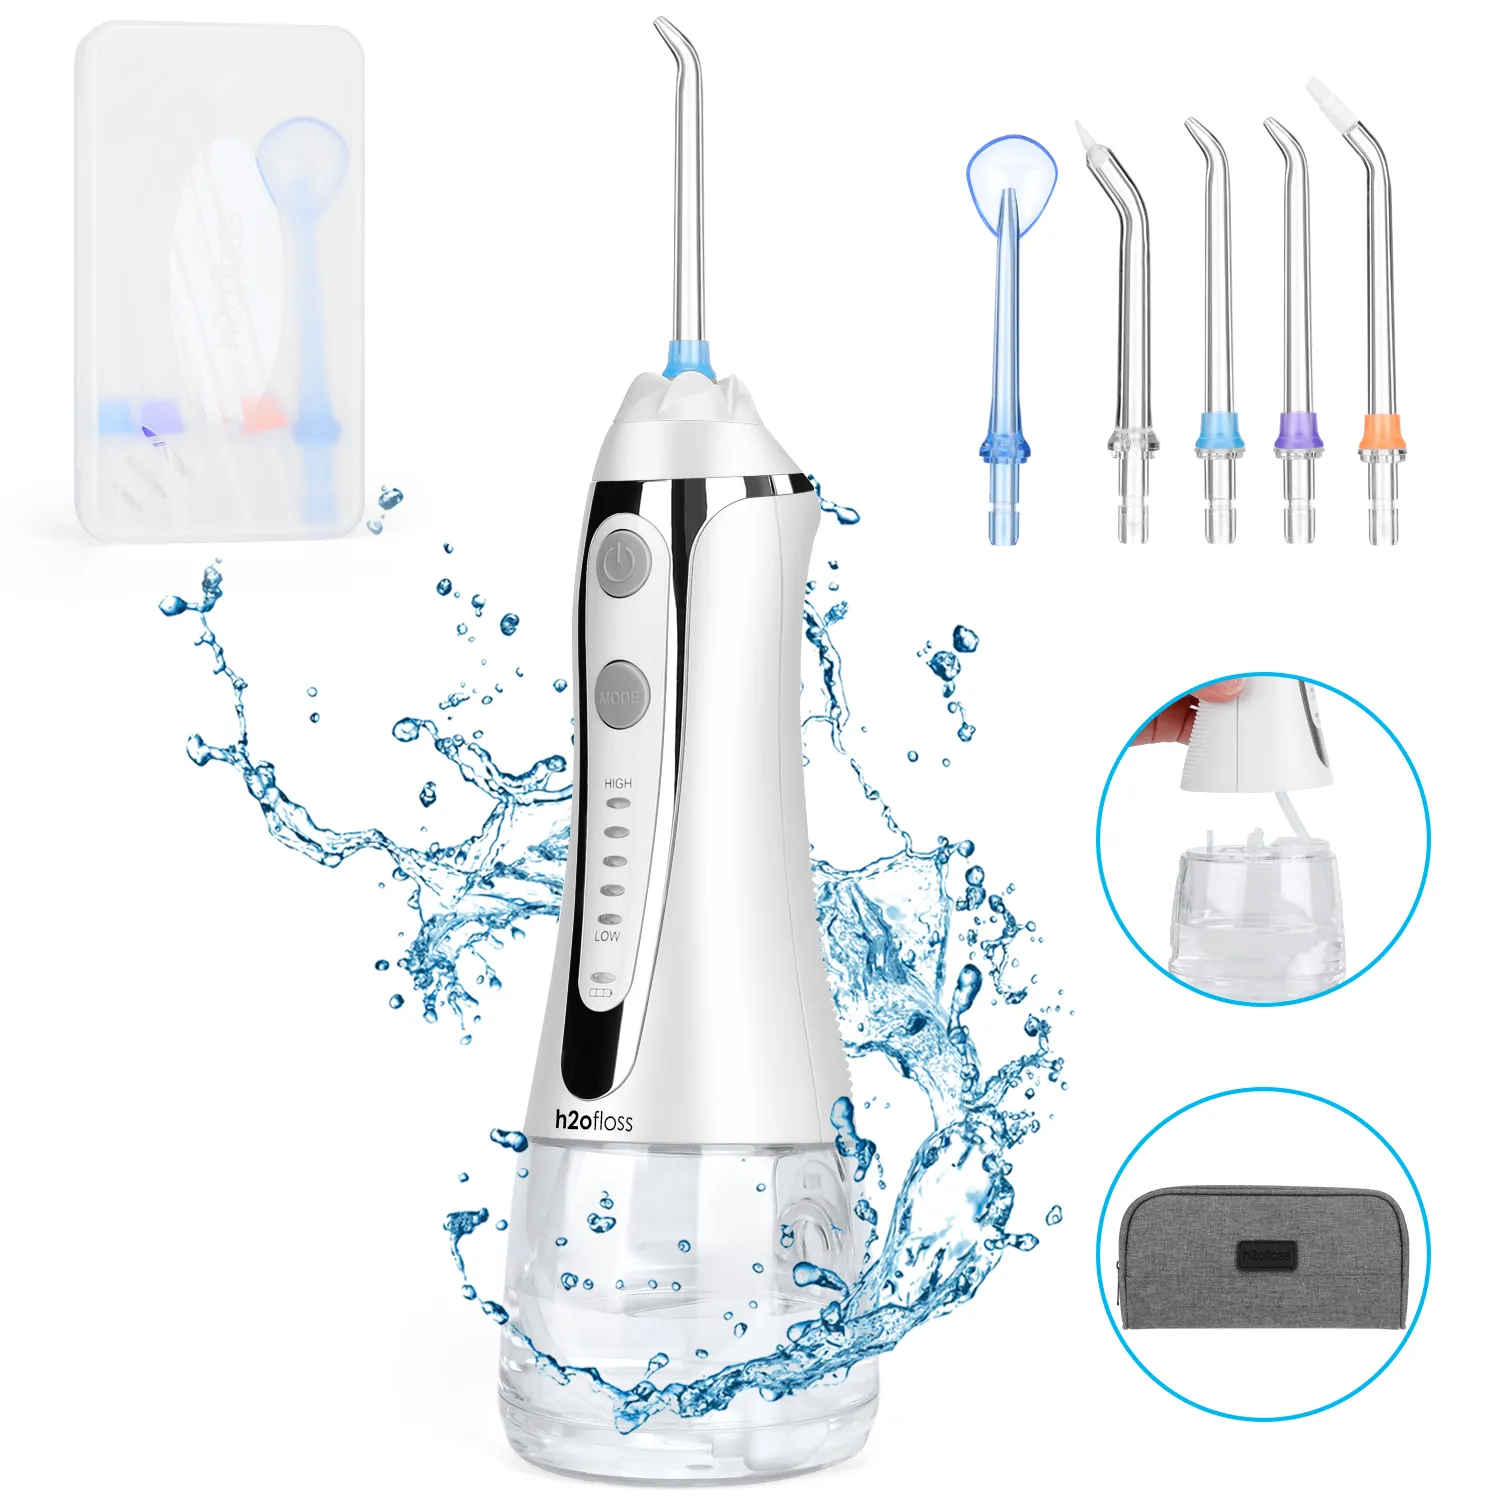 H2ofloss Portable water flosser IPX7 Waterproof 5 Modes 300mL Dental Oral irrigator Rechargeable dental flosser